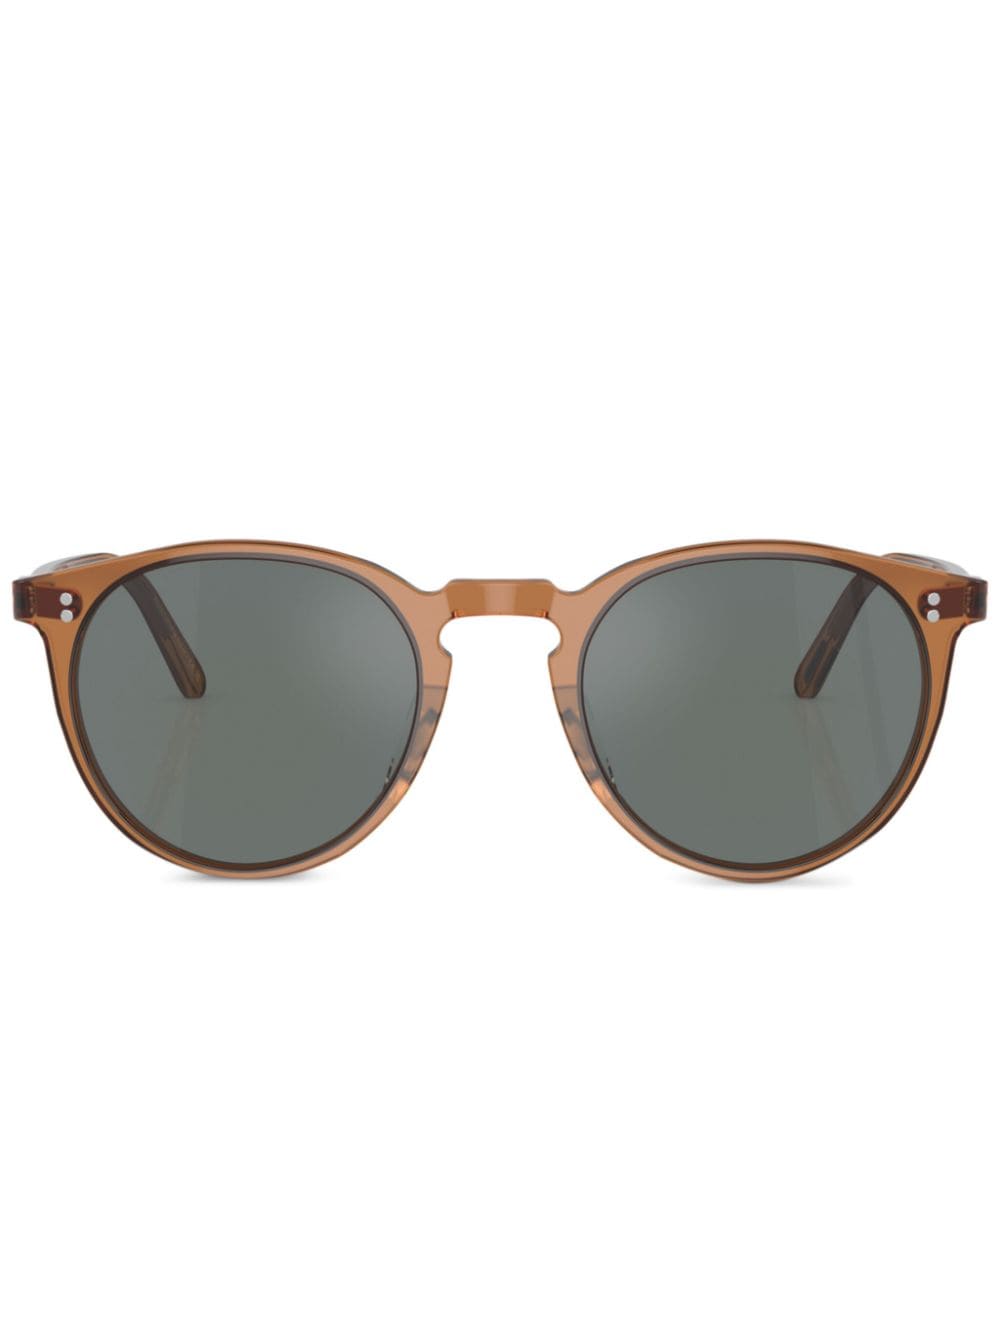 O'Malley Sun pantos-frame sunglasses